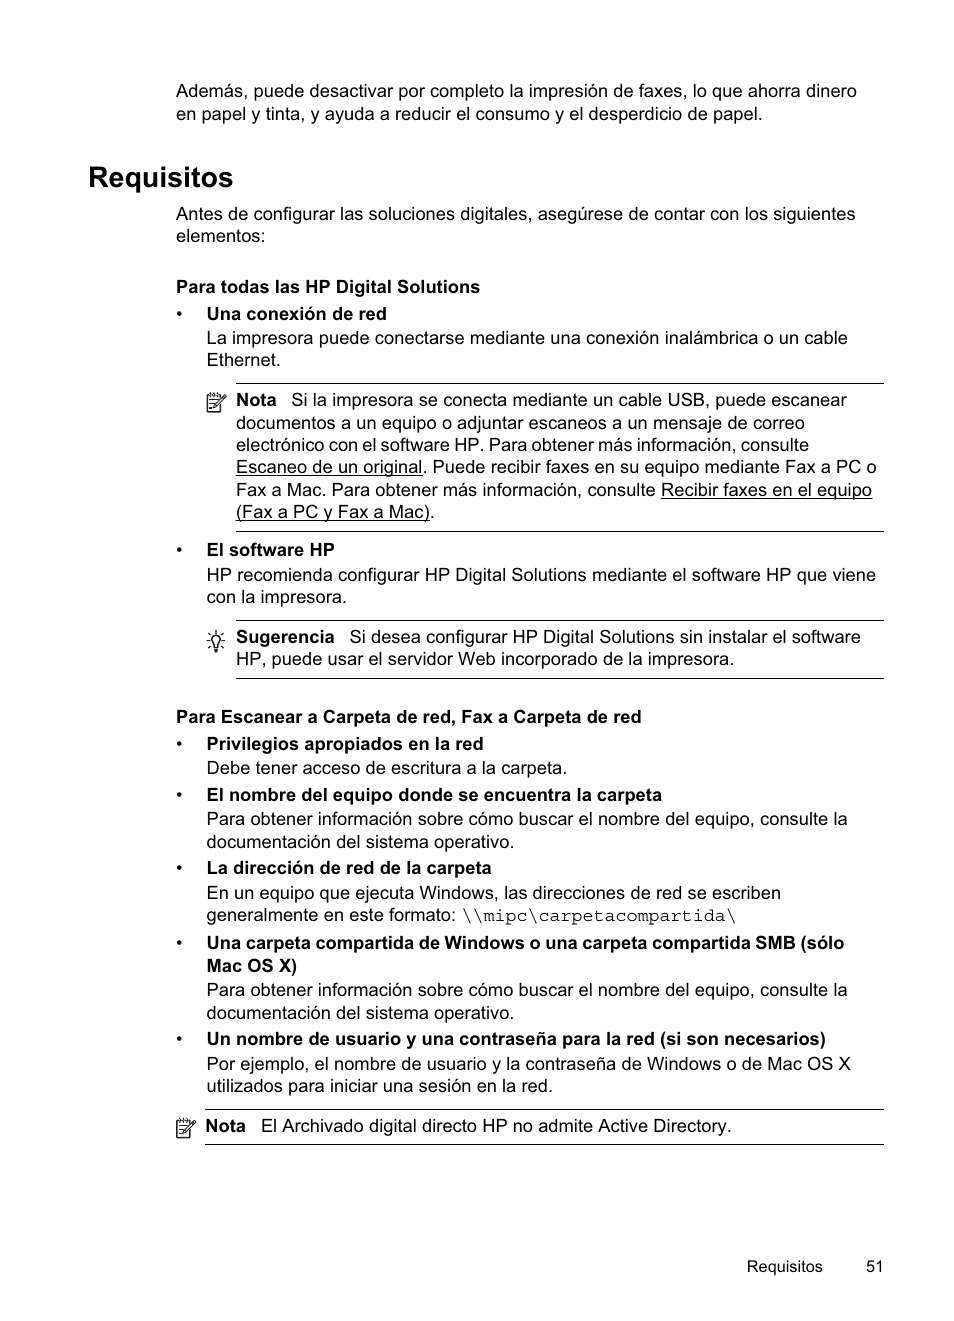 Requisitos | HP Officejet Pro 8500A Manual del usuario | Página 55 / 264